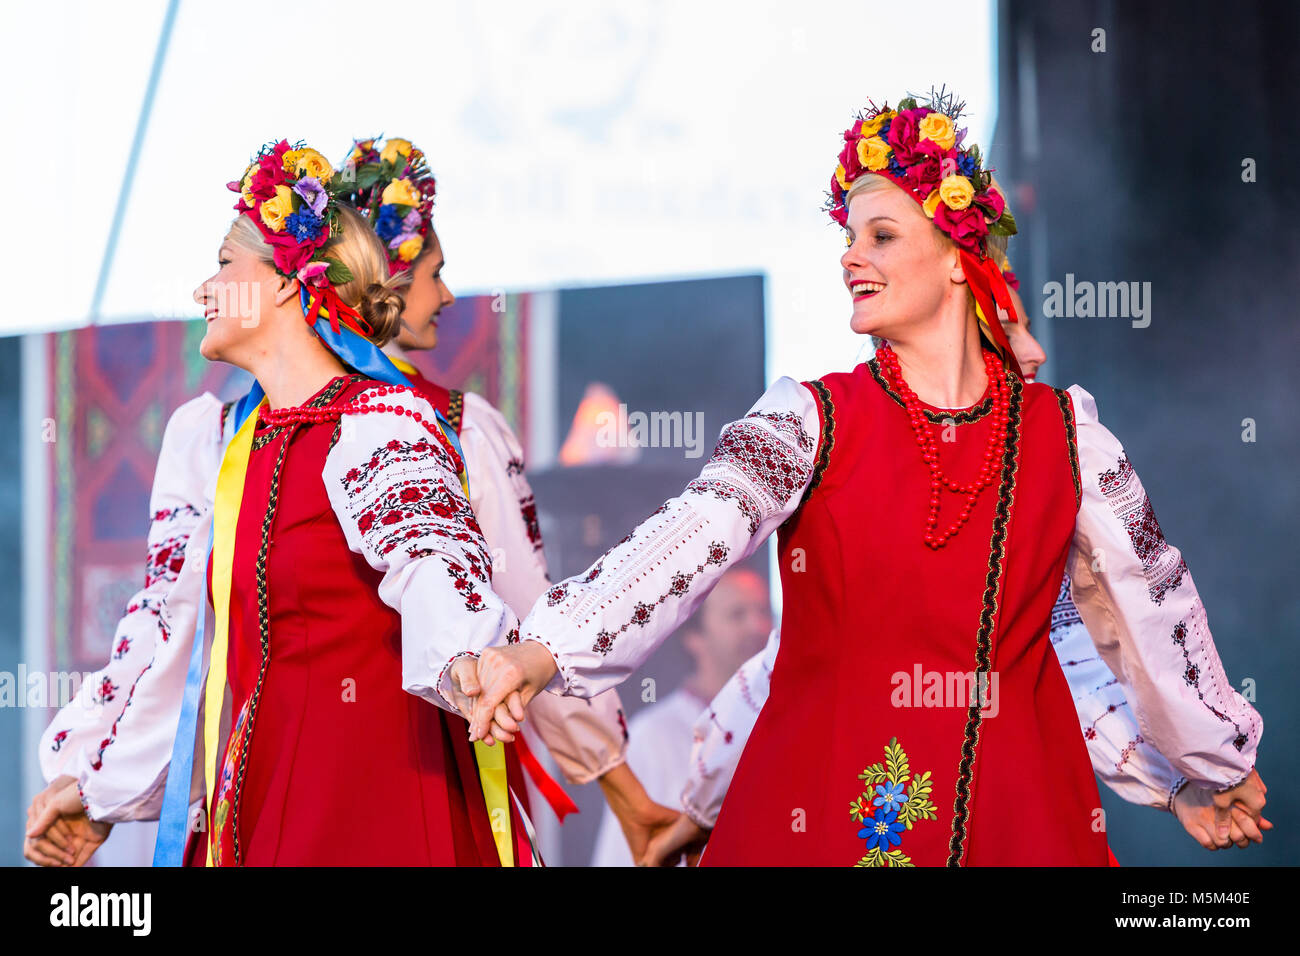 Bunbury, Western Australia. 24th February, 2018. Ukraine Cossack Dancers on stage at South West Multicultural Festival. Chris de Blank/Alamy Live News Stock Photo